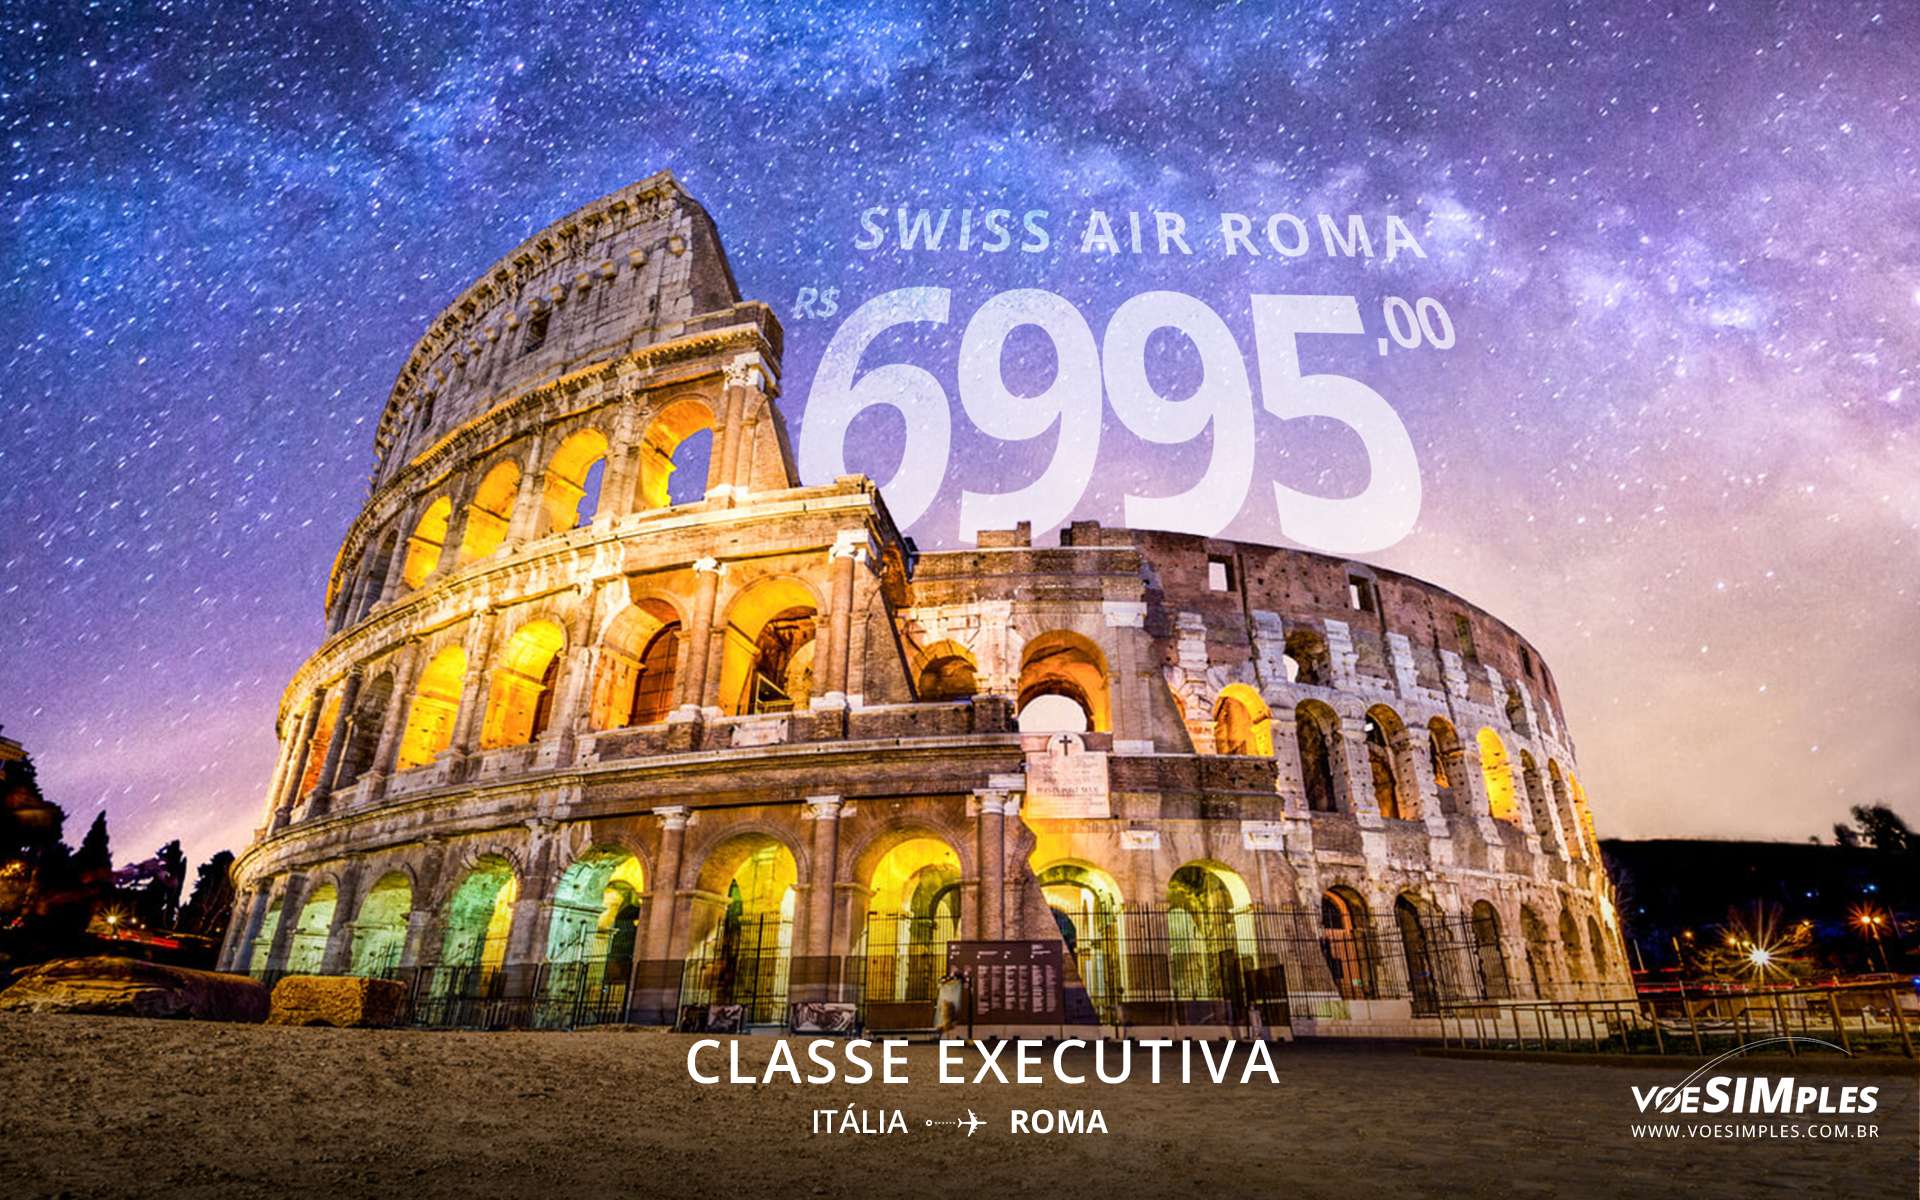 classe executiva Swiss Air